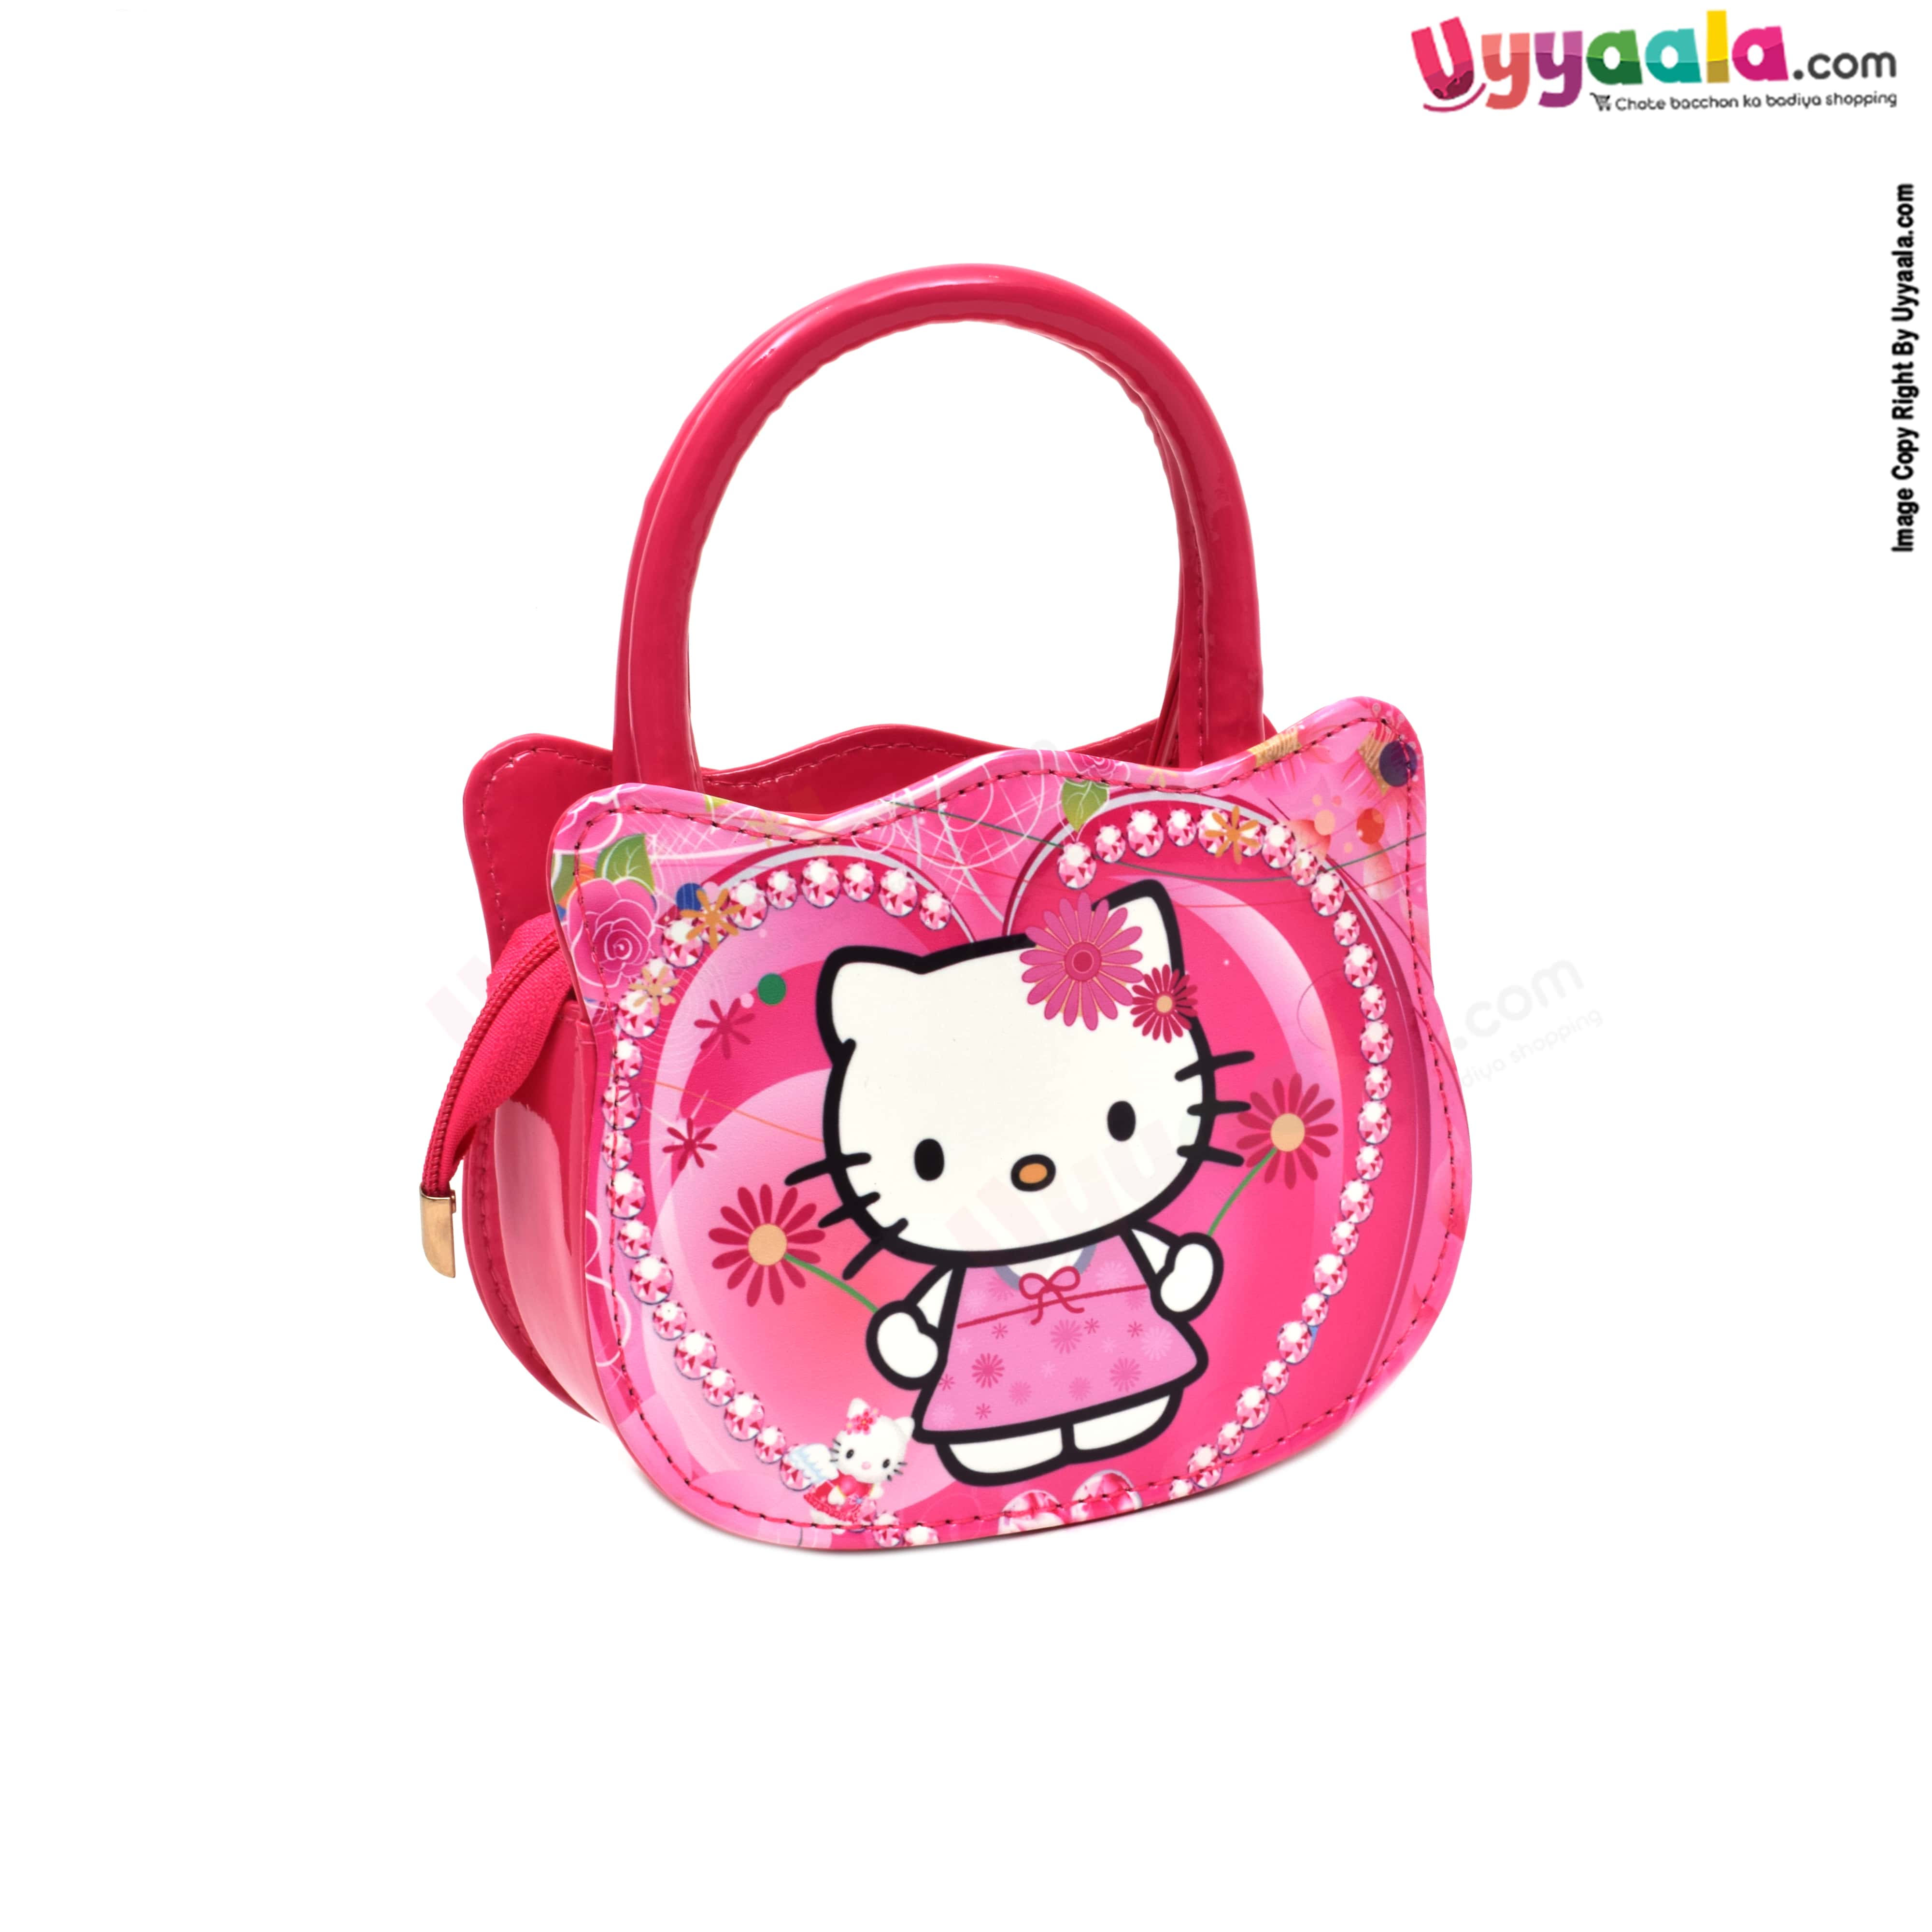 kids hand bag for baby girl with adjustable strap & hello kitty print